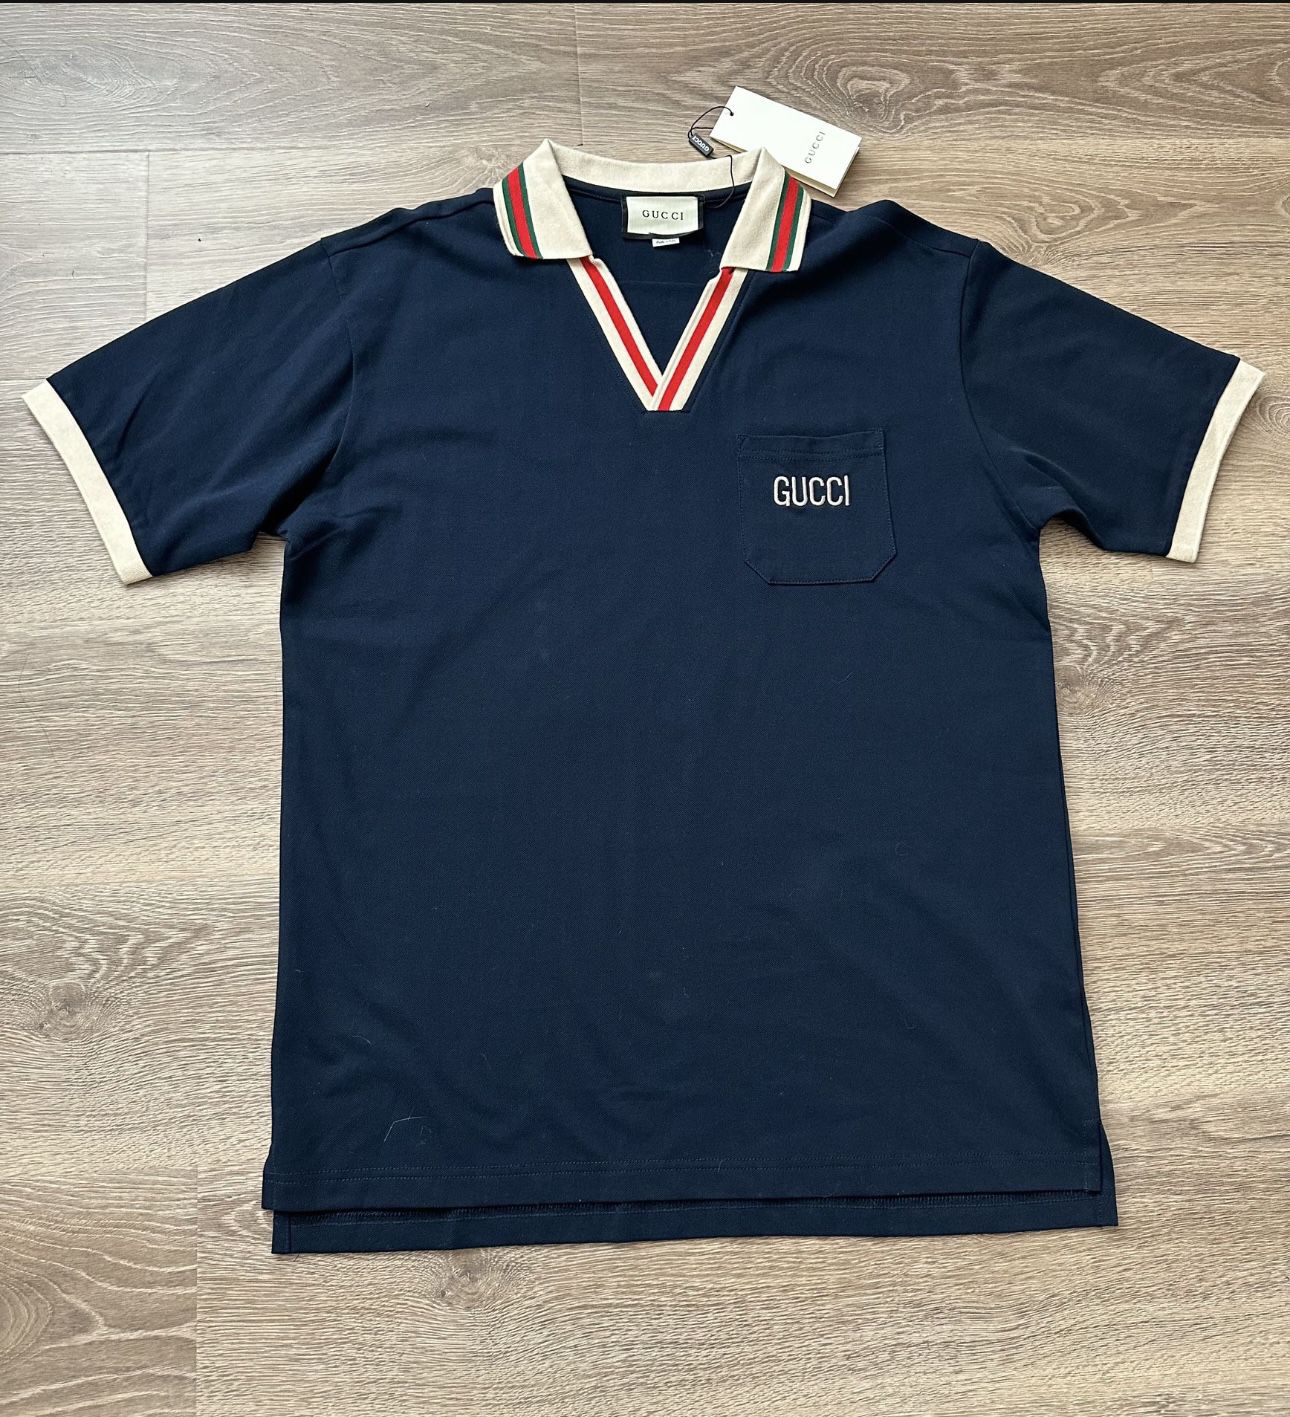 Gucci Tshirt Size XL European Size 3xl 